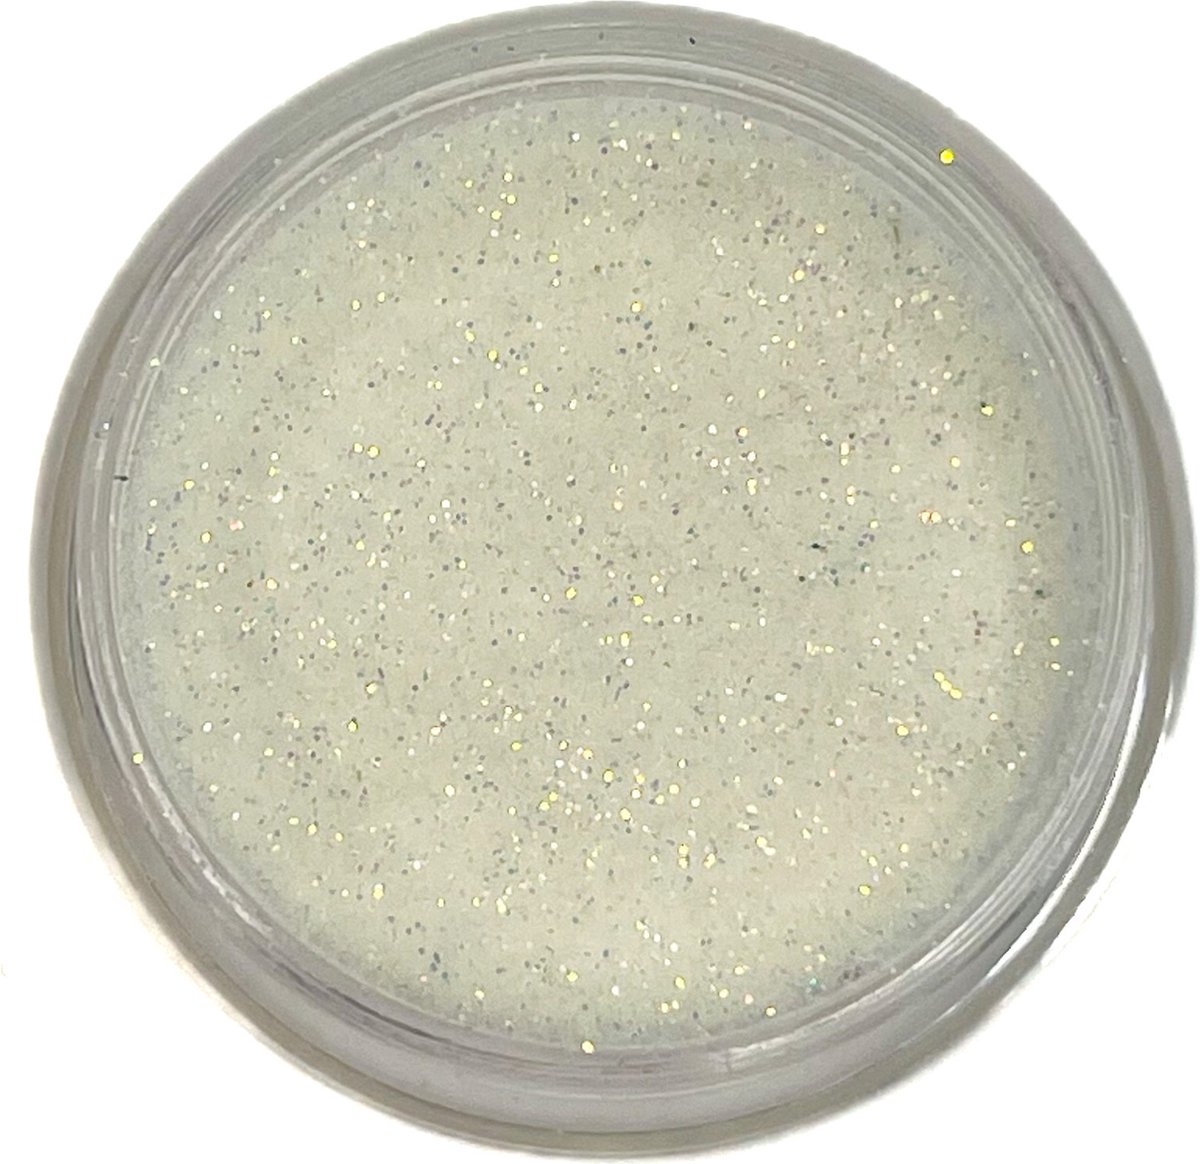 Roena's Beauty- Glitter Powder- Golden sparkle